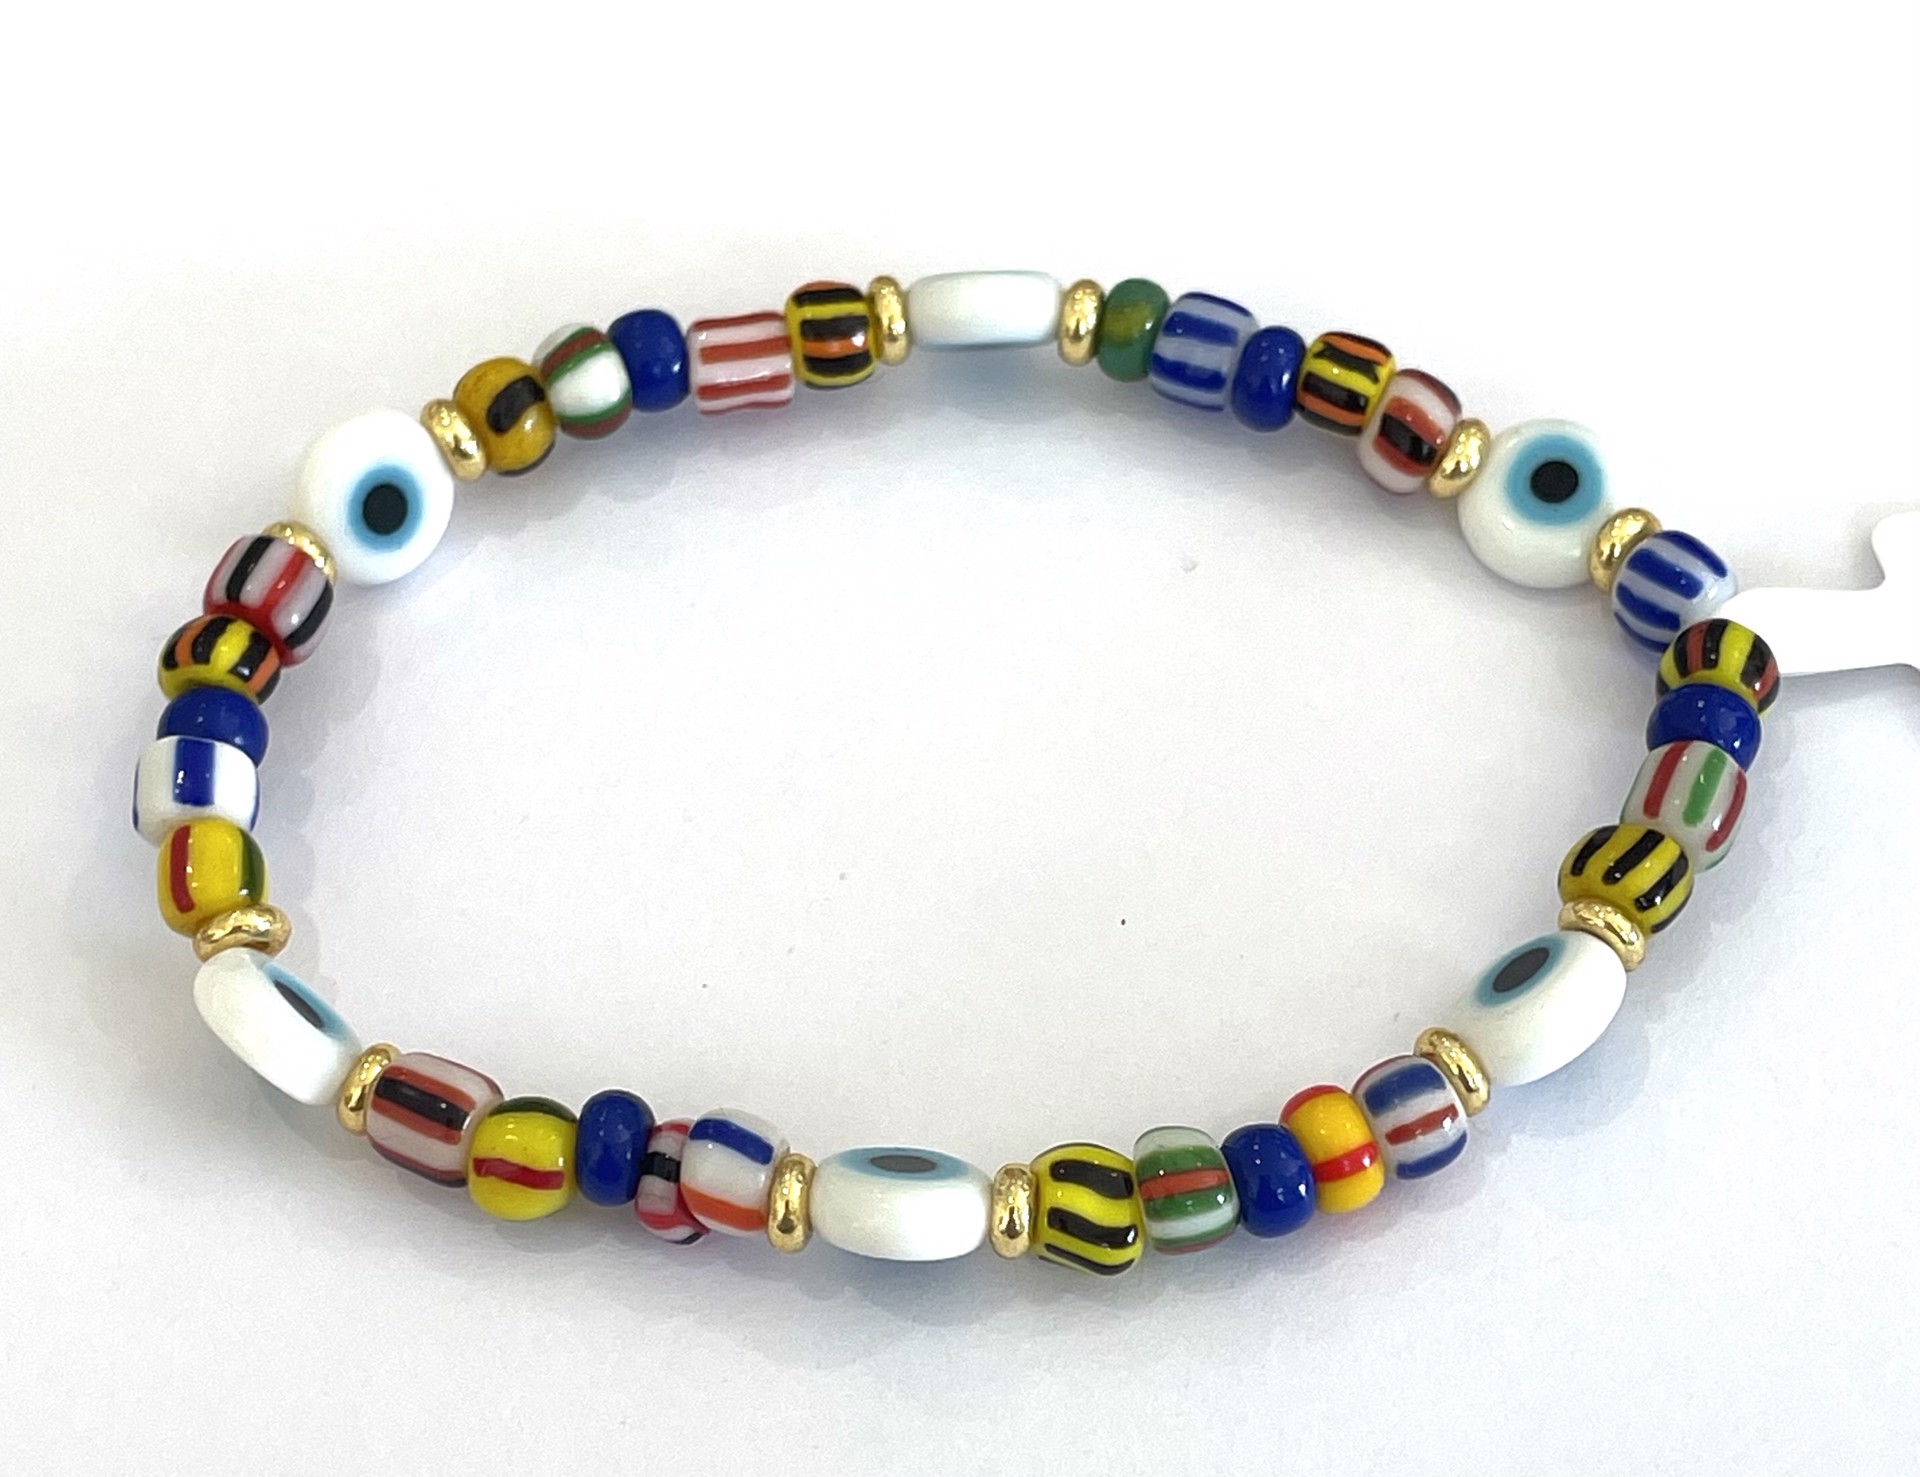 African Trade Bead Bracelet by Emelie Hebert